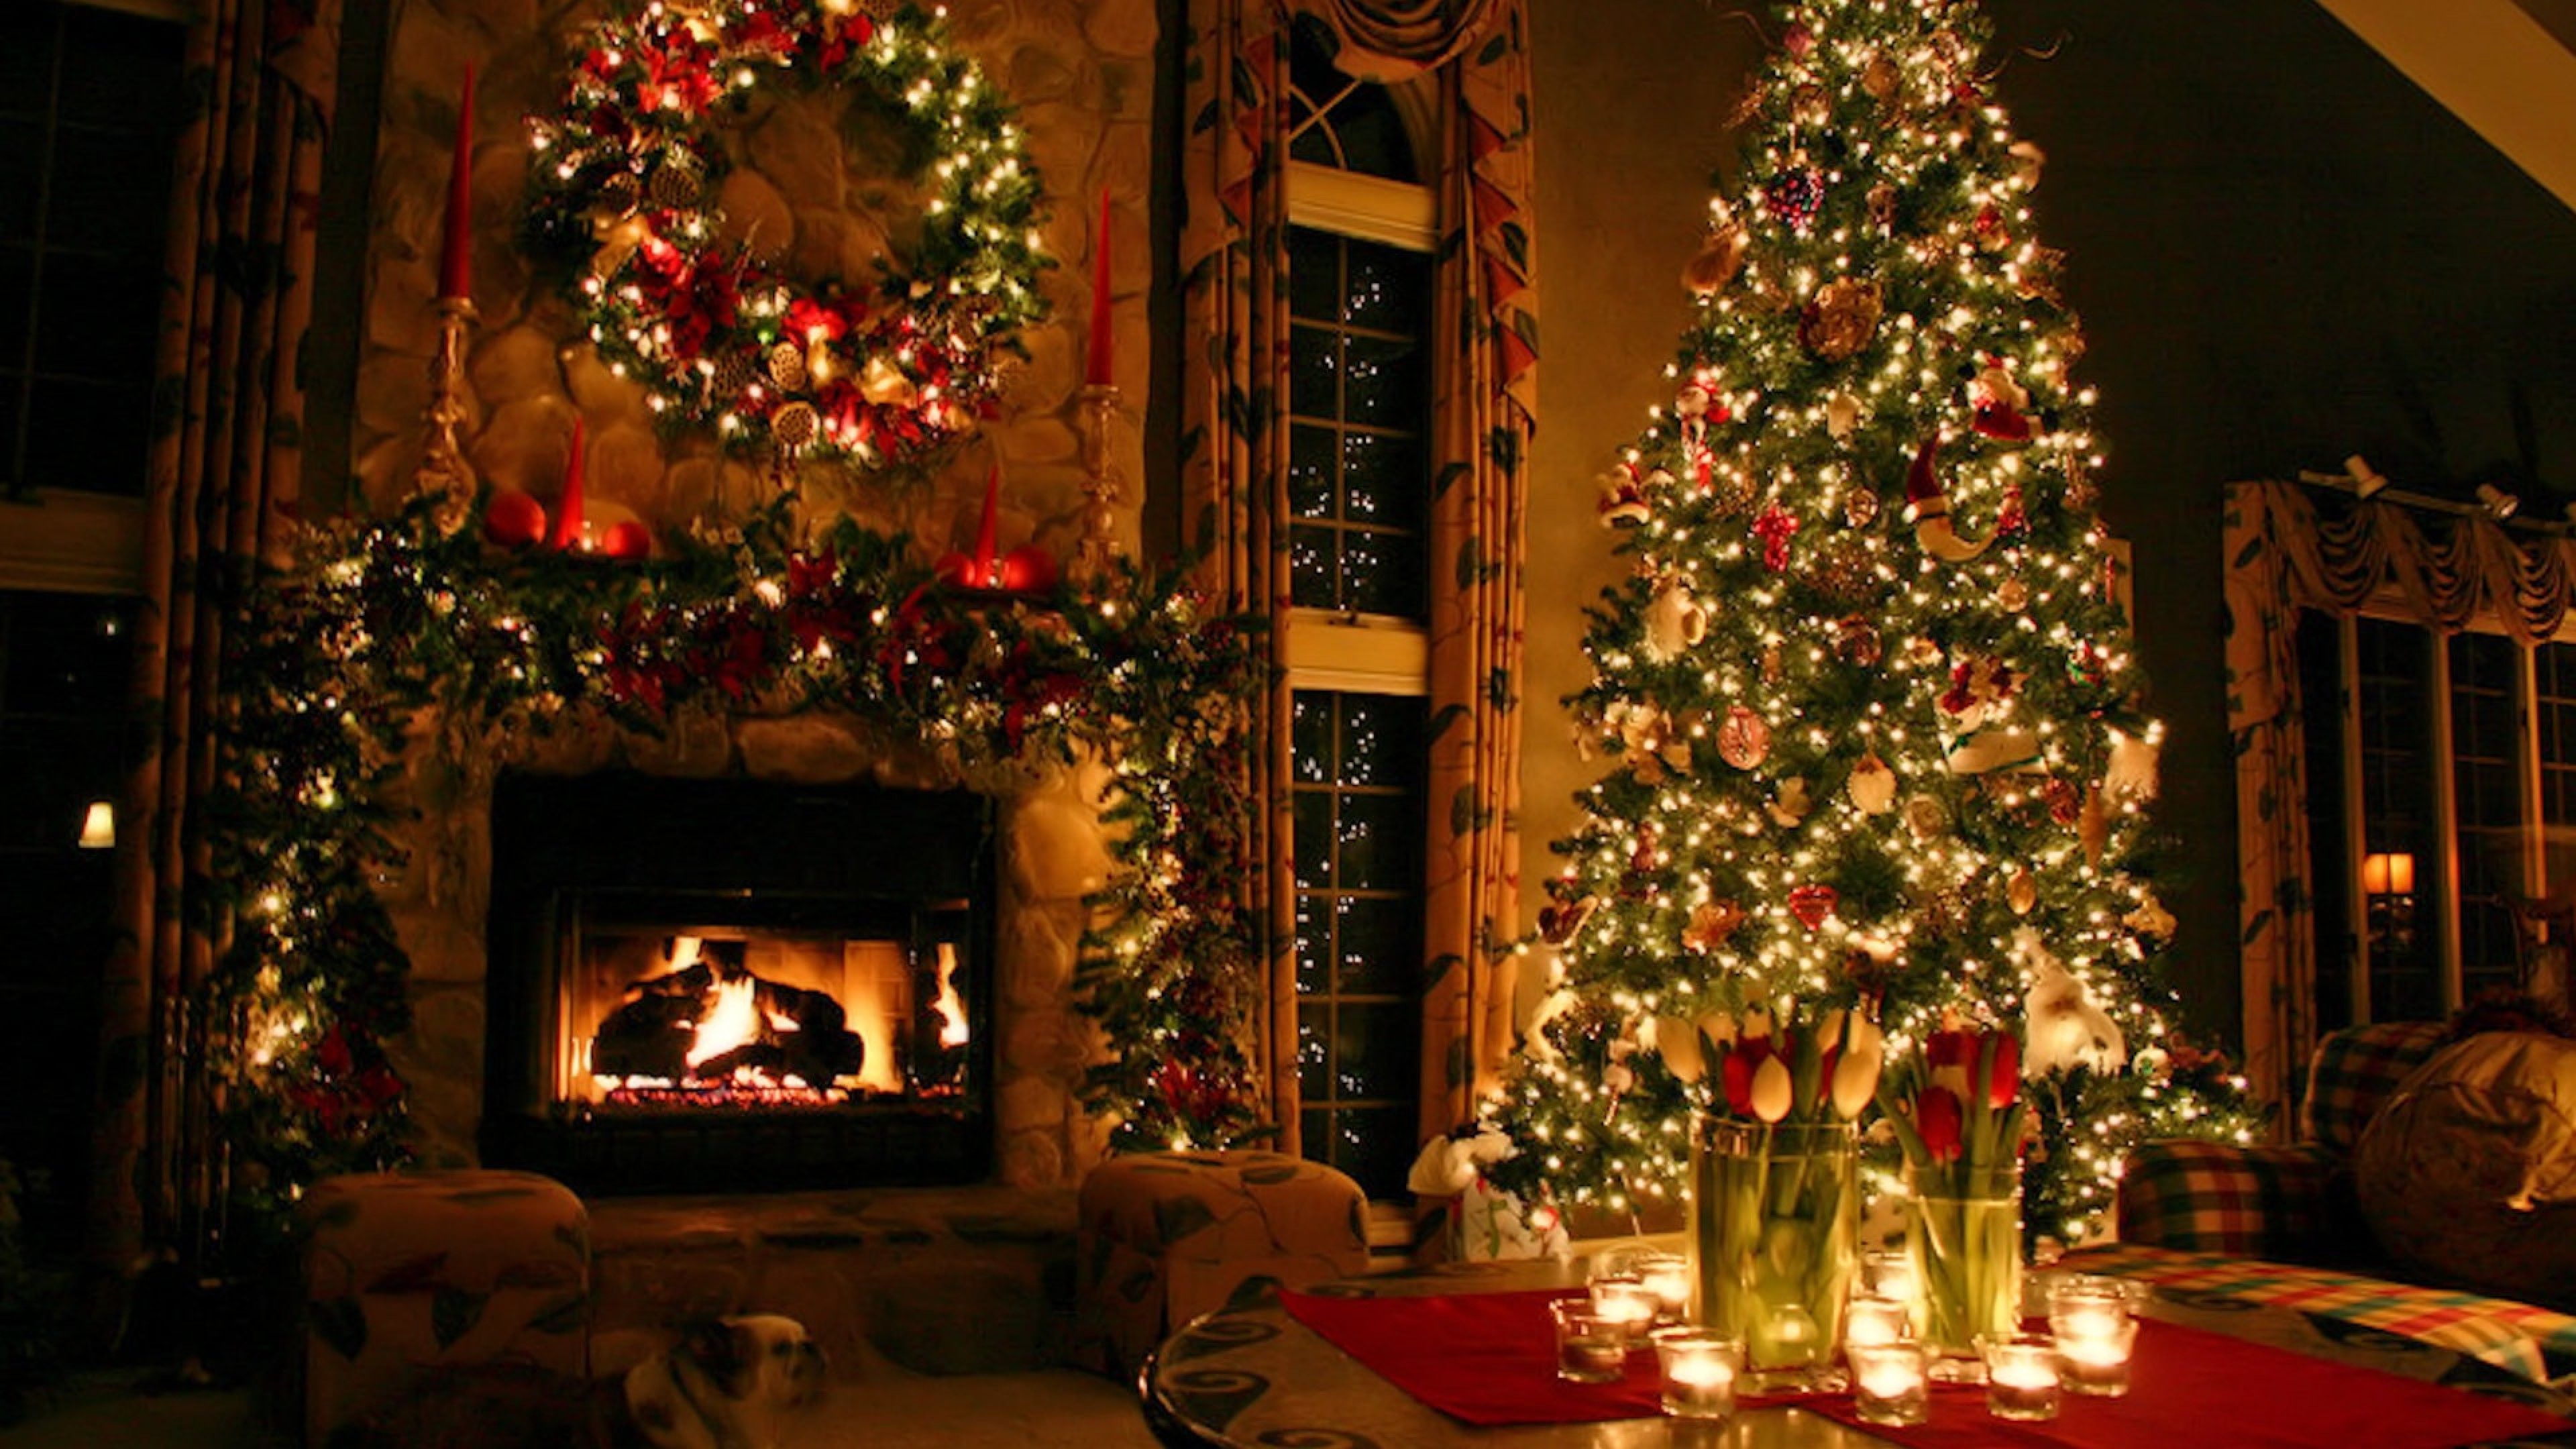 hd wallpaper cozy christmas